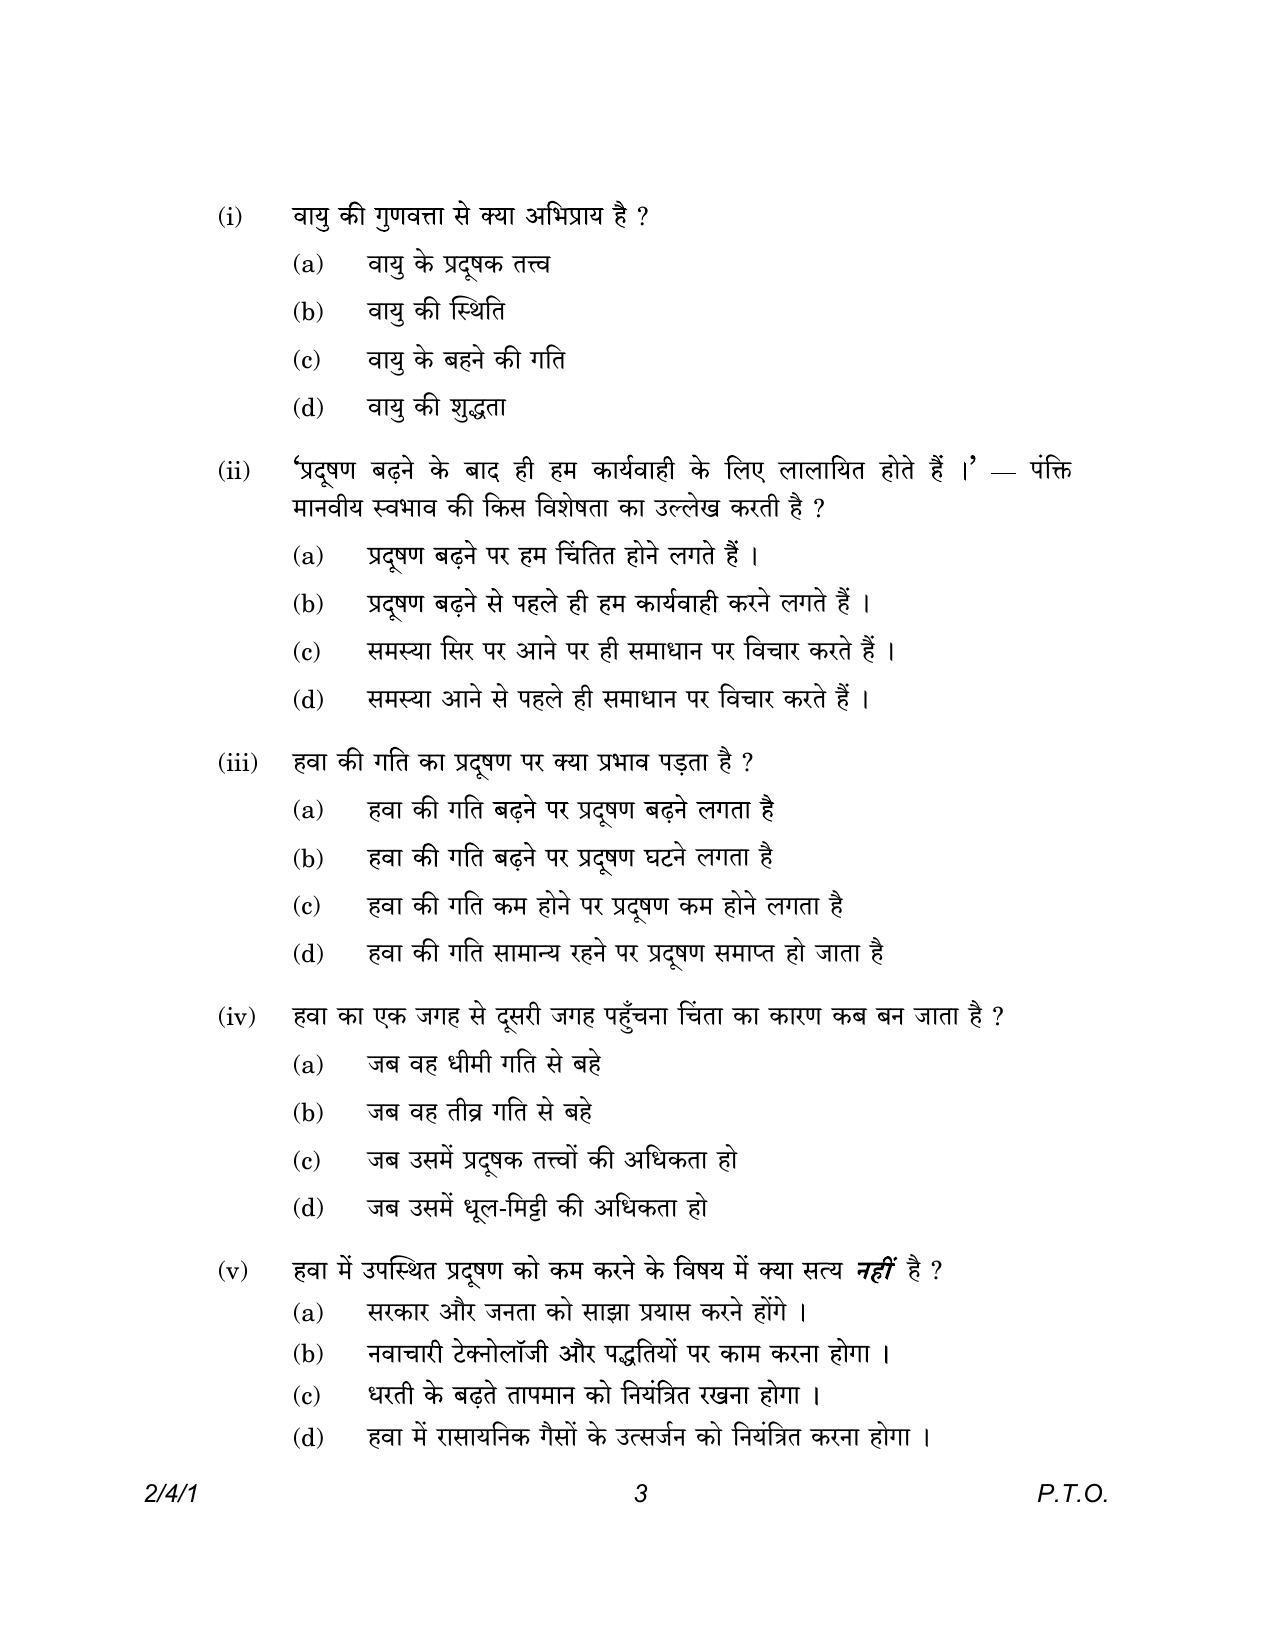 CBSE Class 12 2-4-1 Hindi Core version 2023 Question Paper - Page 3